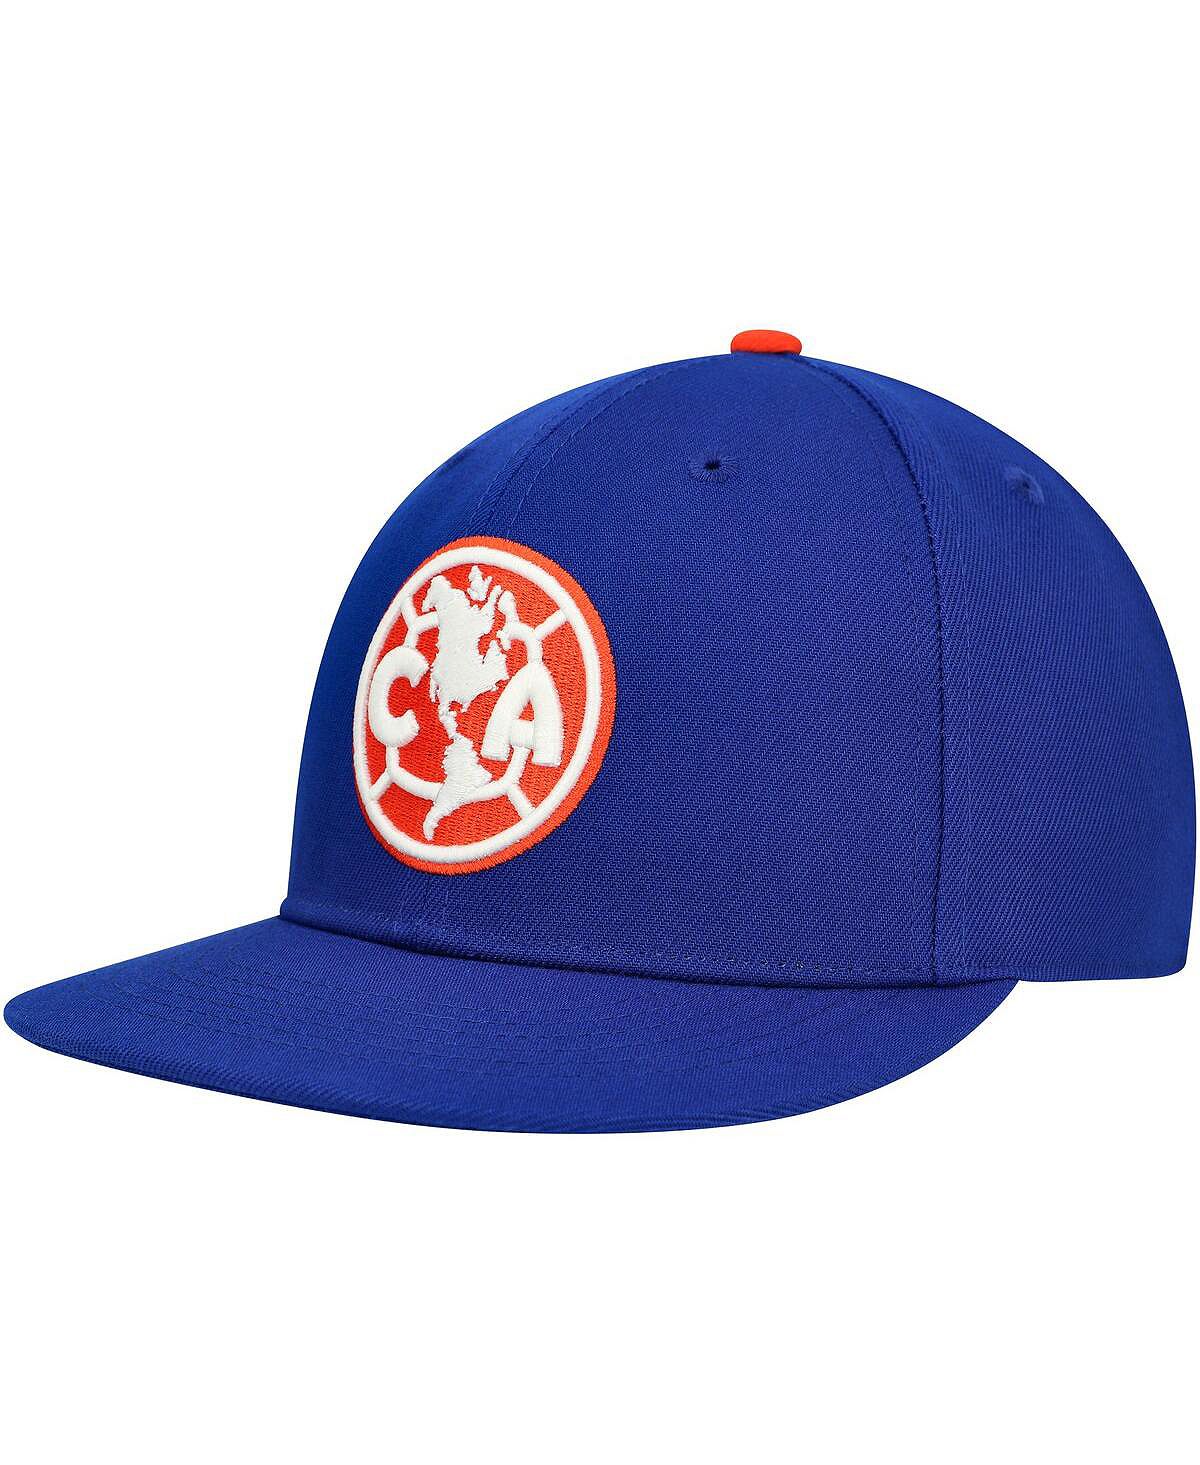 мужская синяя регулируемая шляпа cruz azul club gold fan ink Мужская синяя кепка Club America America's Game Snapback Fan Ink